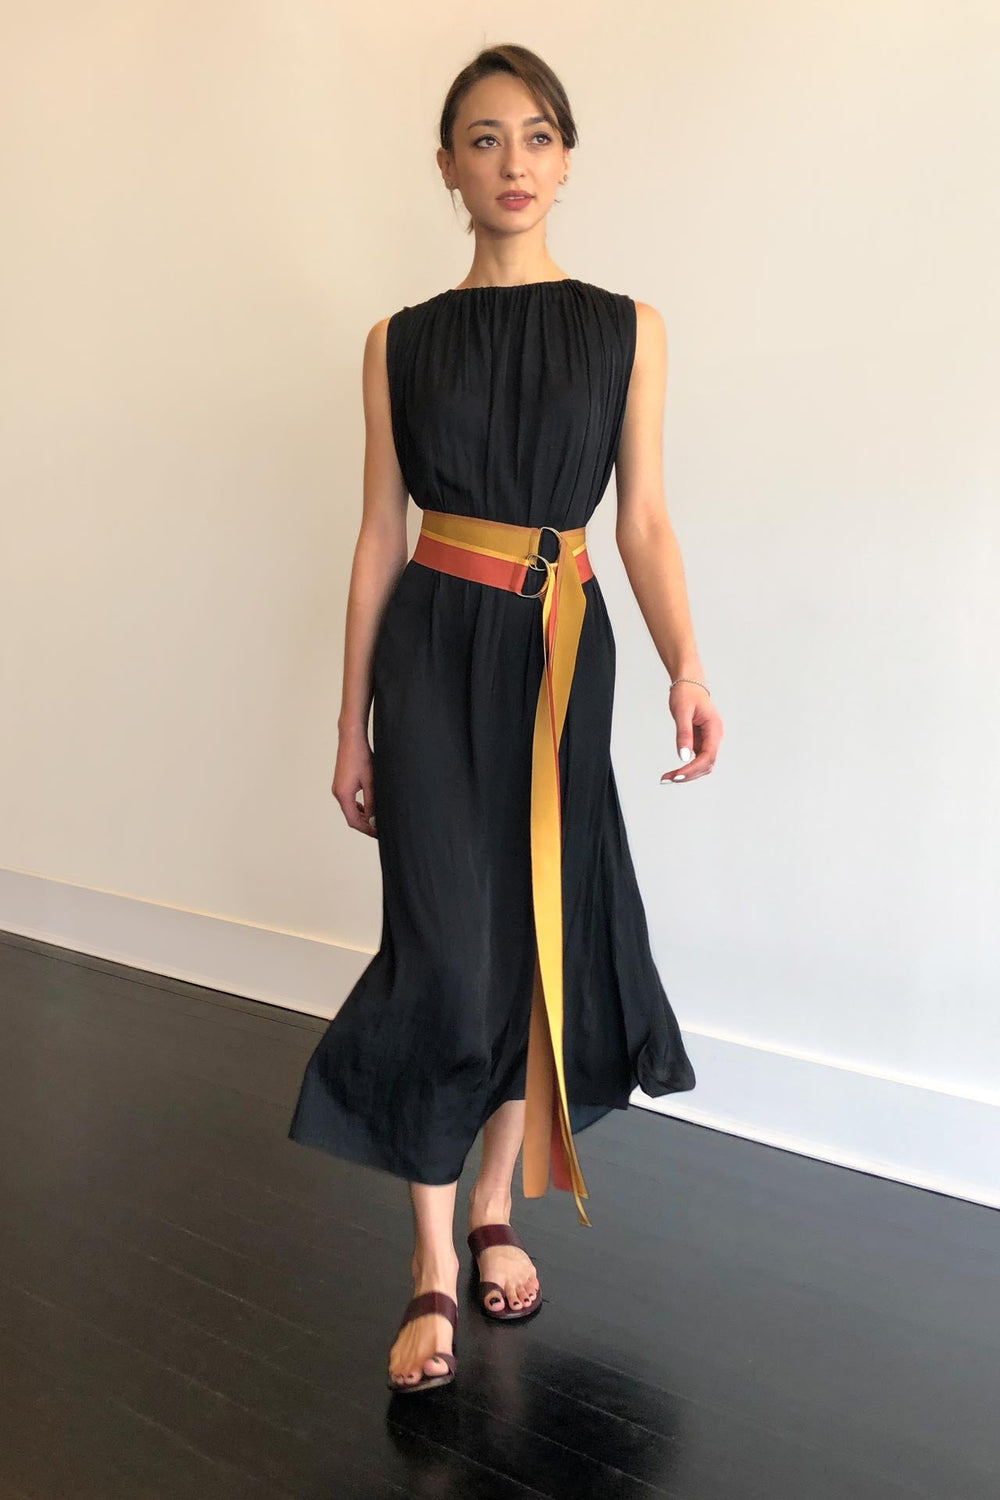 Fashion Designer CARL KAPP collection | Granite Onesize Fits All Black dress | Sydney Australia